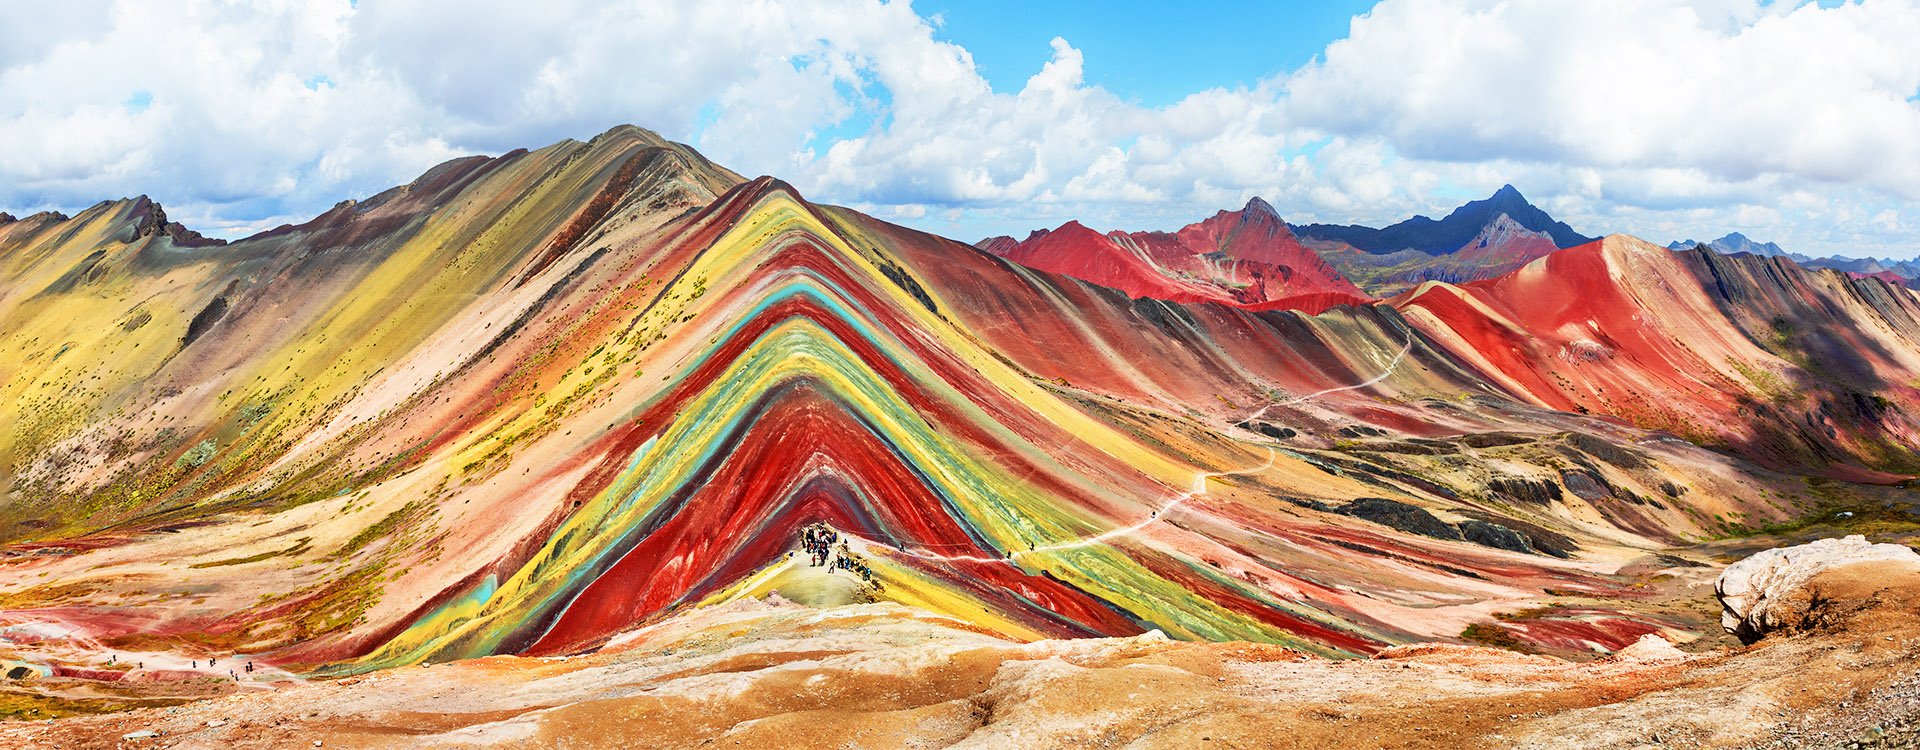 Rainbow Mountain (Vinicunca Montana de Siete Colores - Spanish) in Cusco, Peru